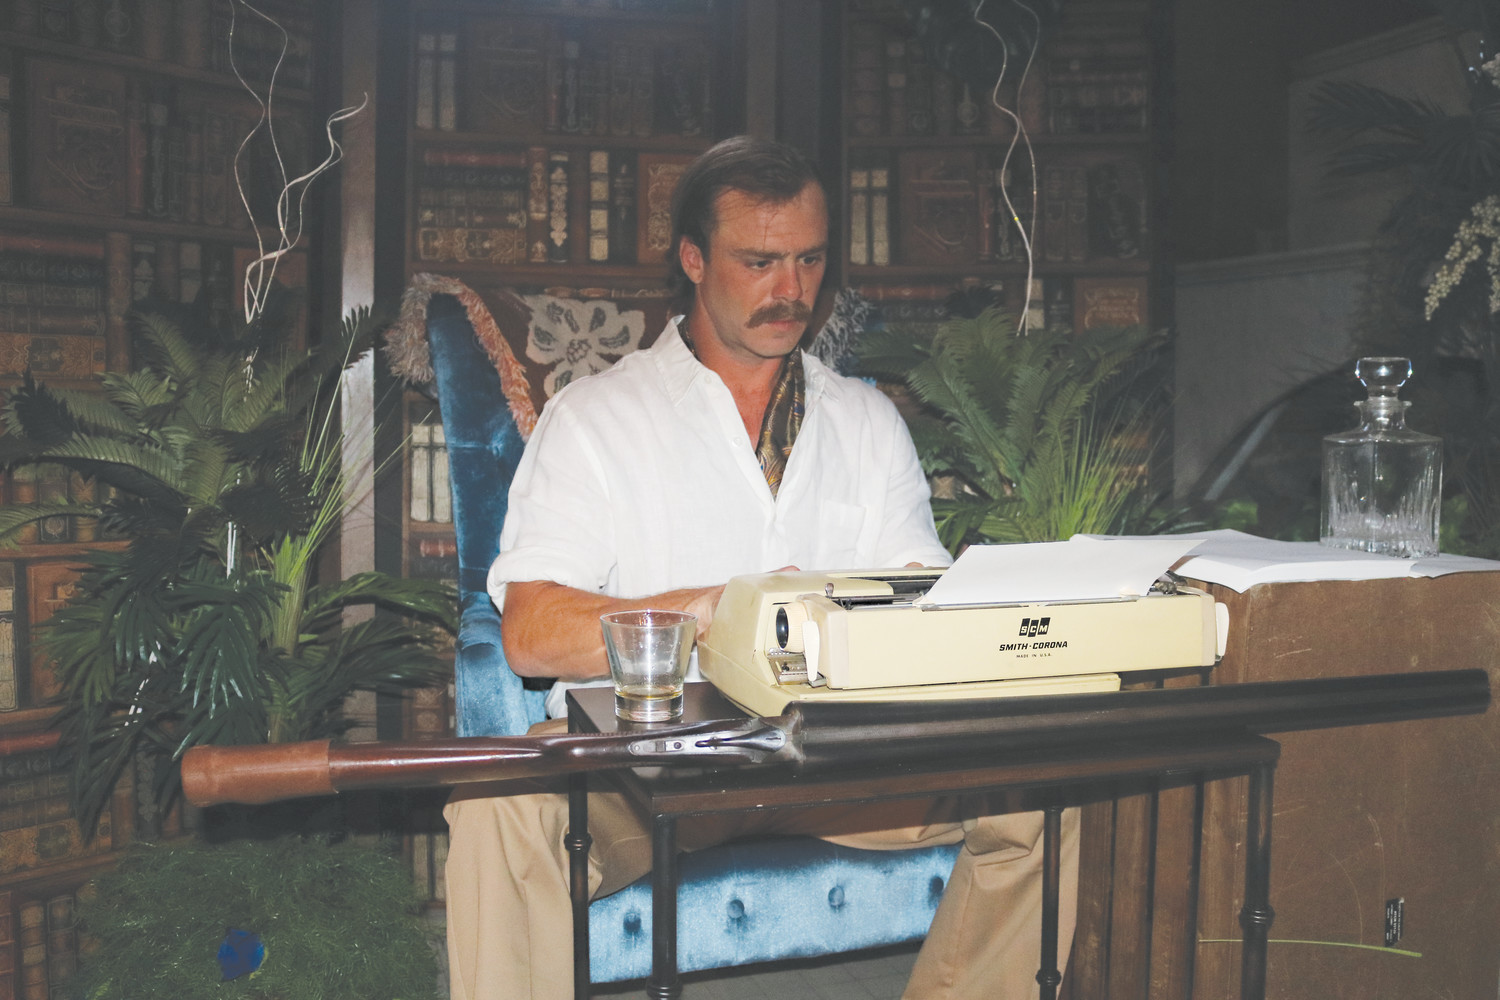 “Ernest Hemingway” works on his next great literary masterpiece.